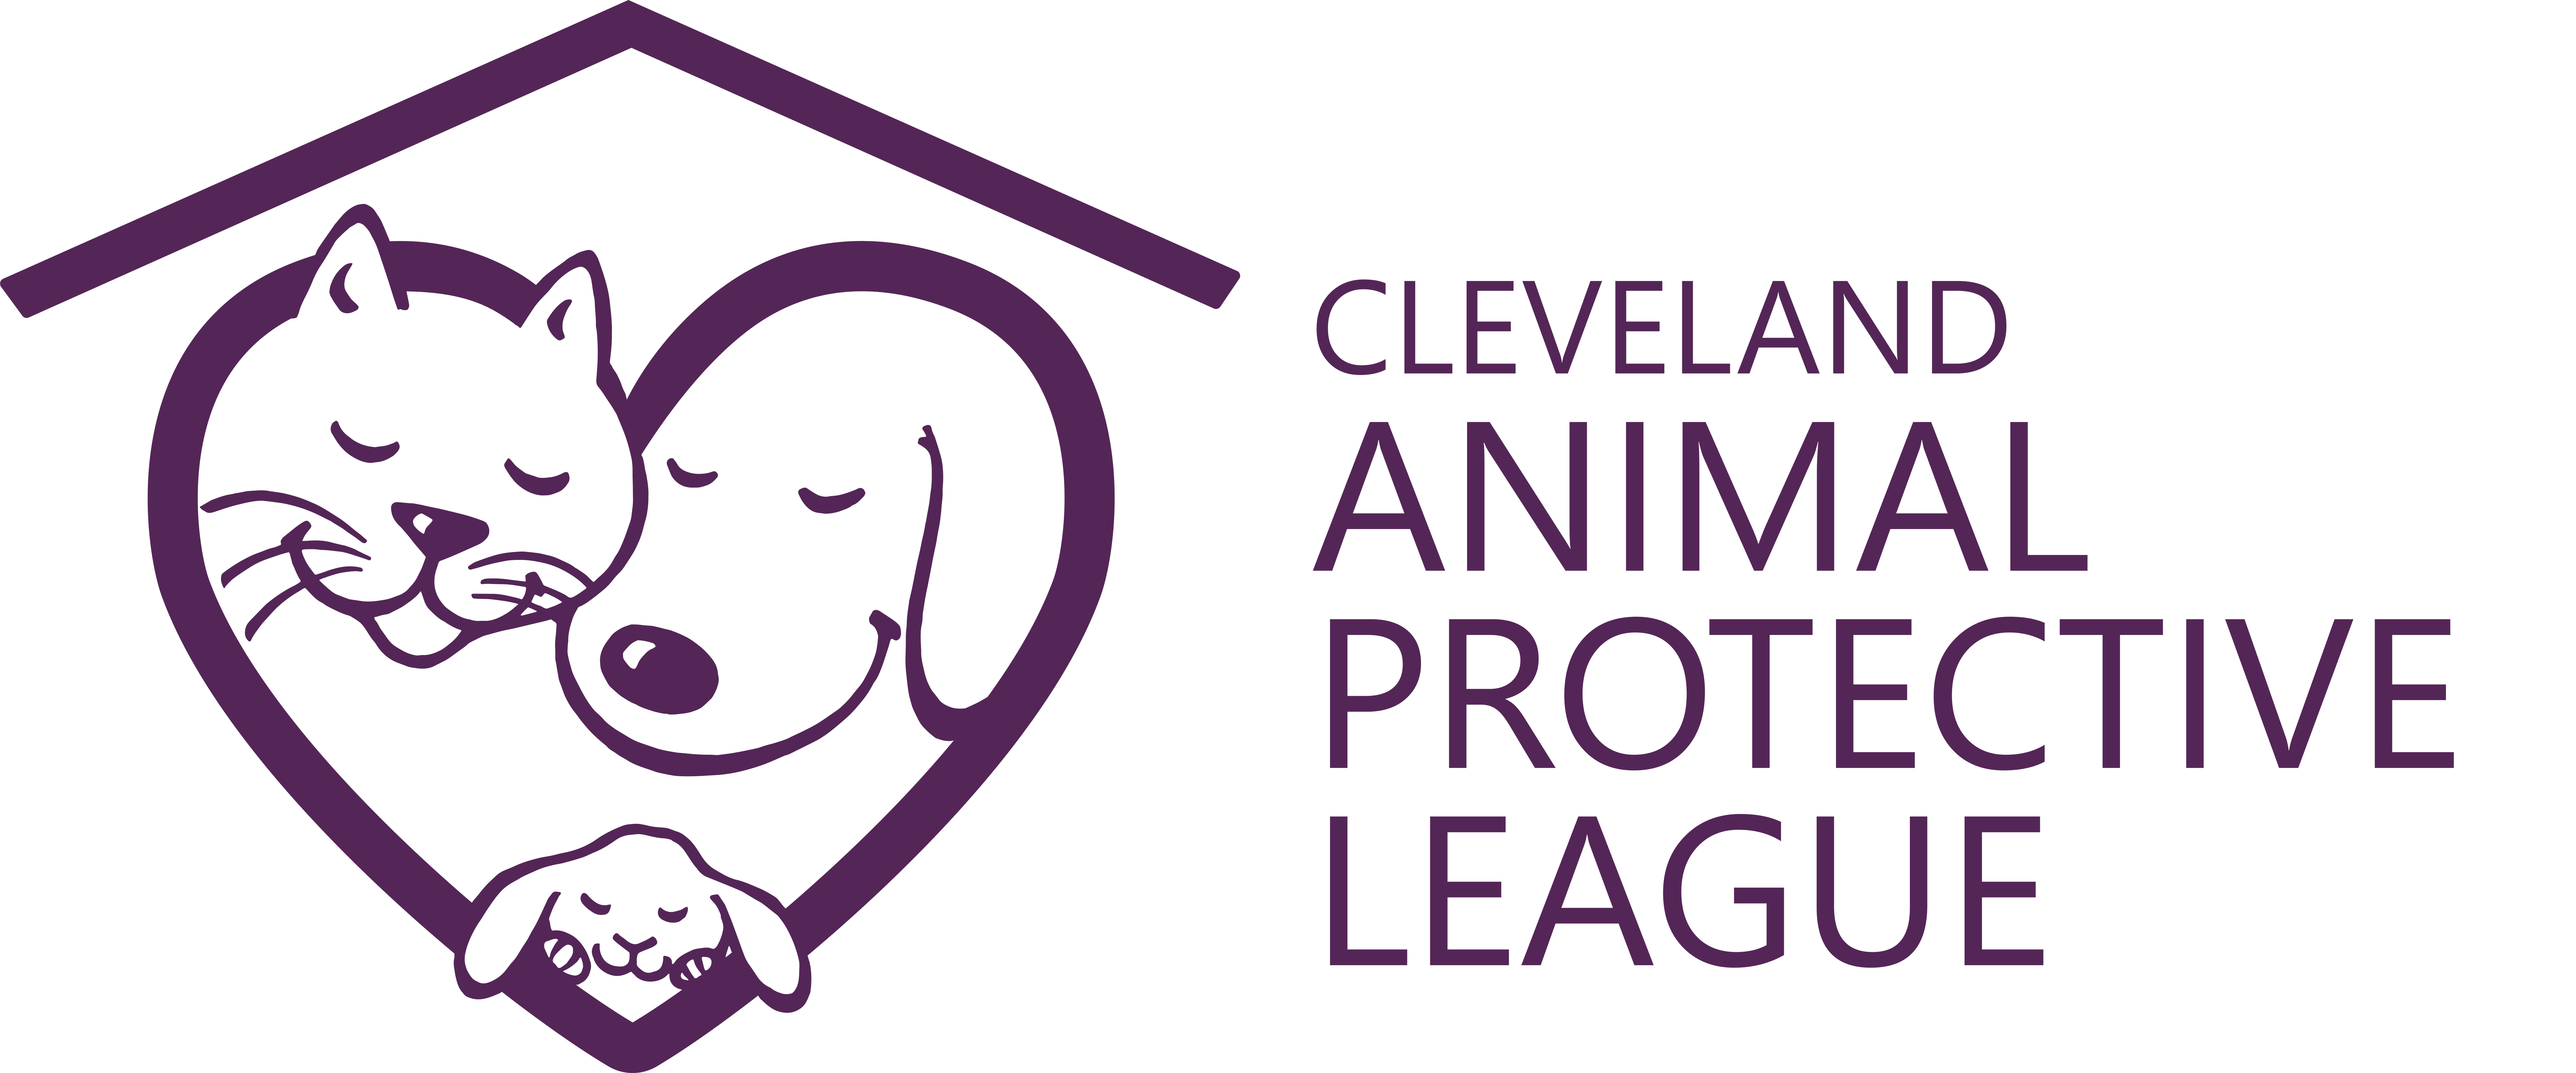 Fairport Cleveland Animal Protective League